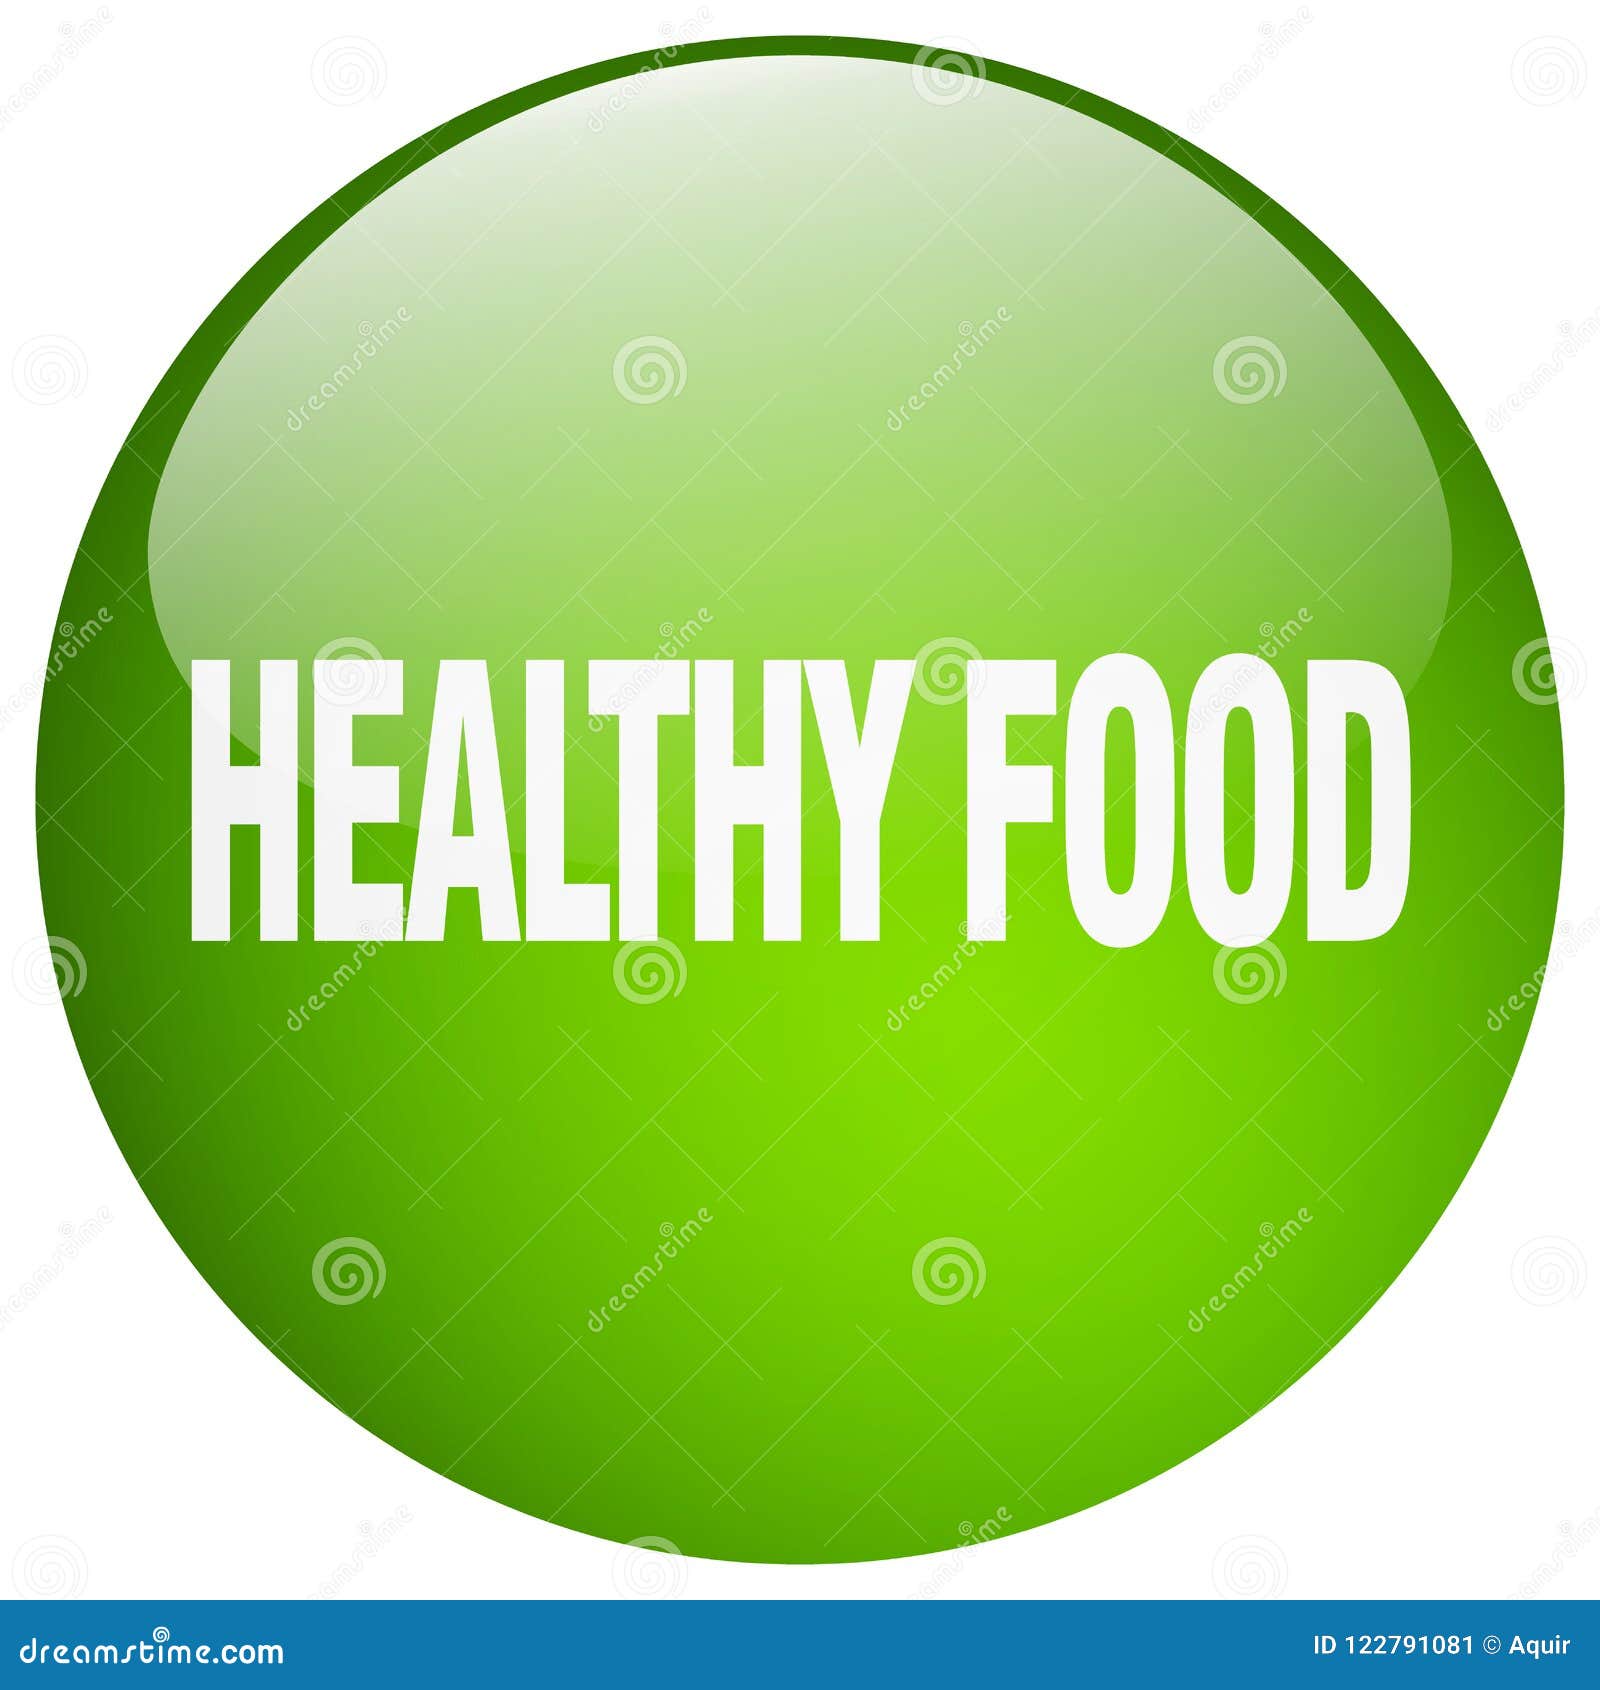 Healthy food button stock vector. Illustration of threedimensional ...